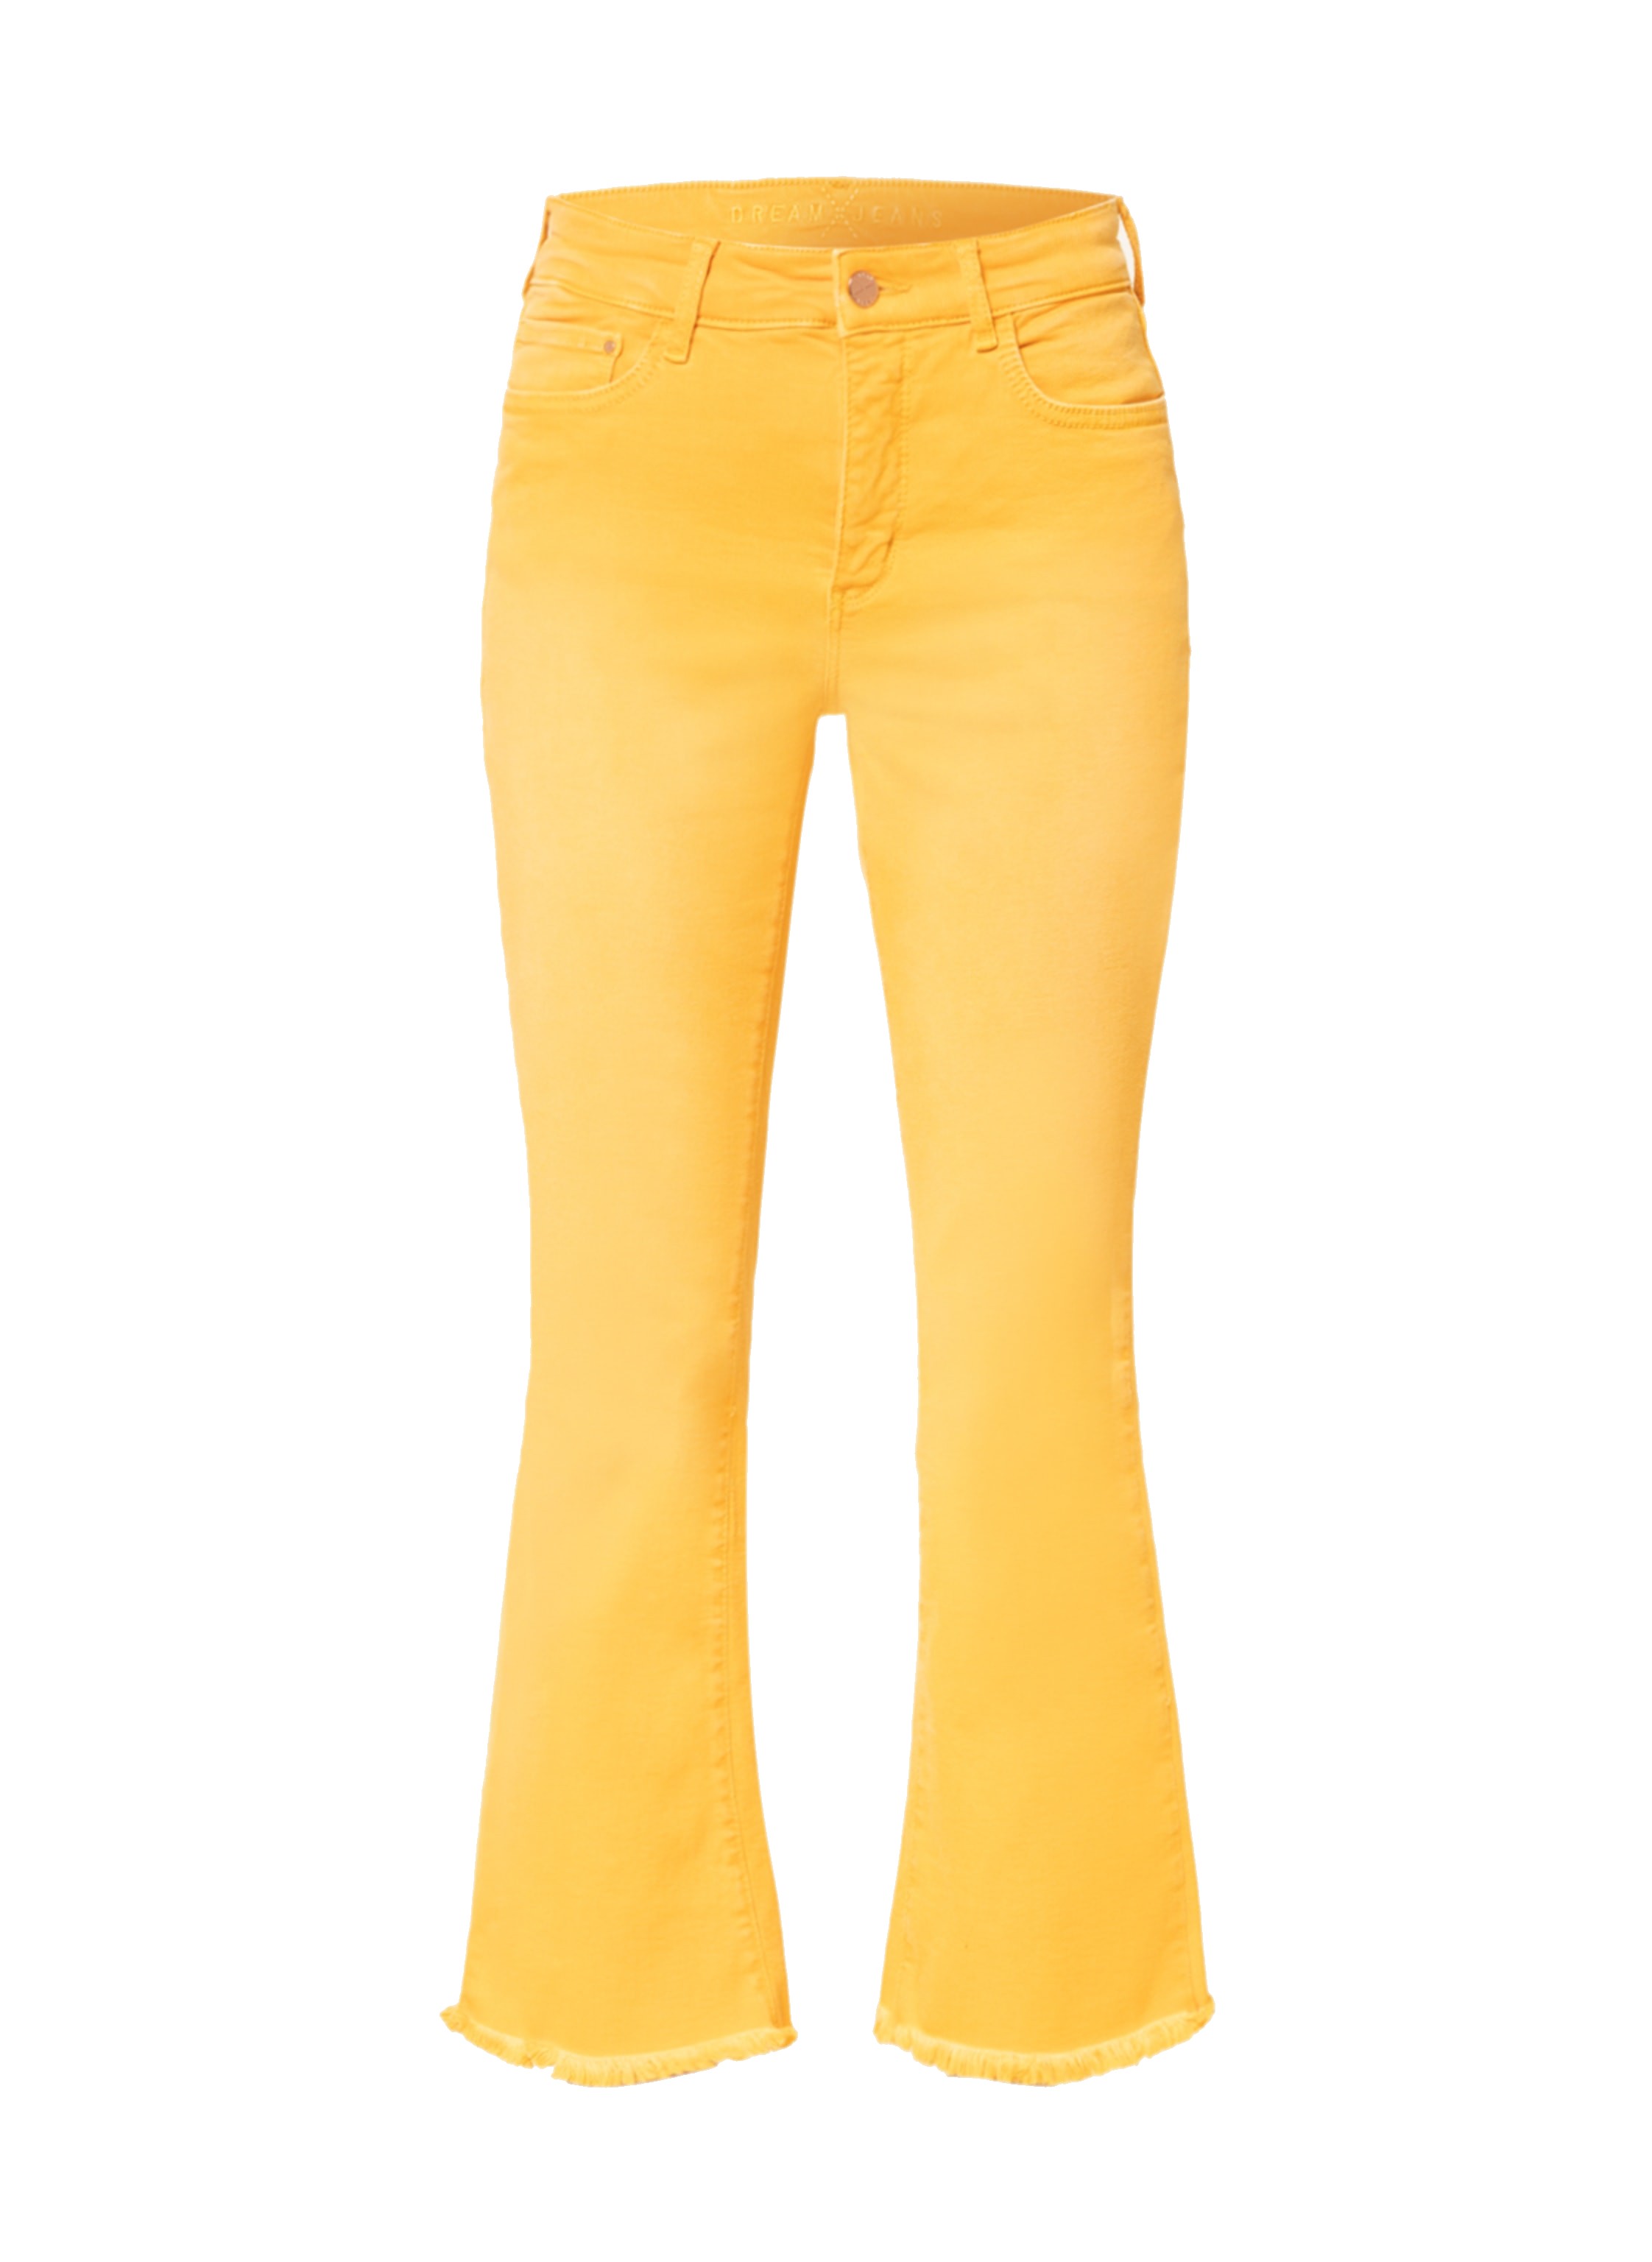 Mac Dream Kick Fringe Jeans in Saffron